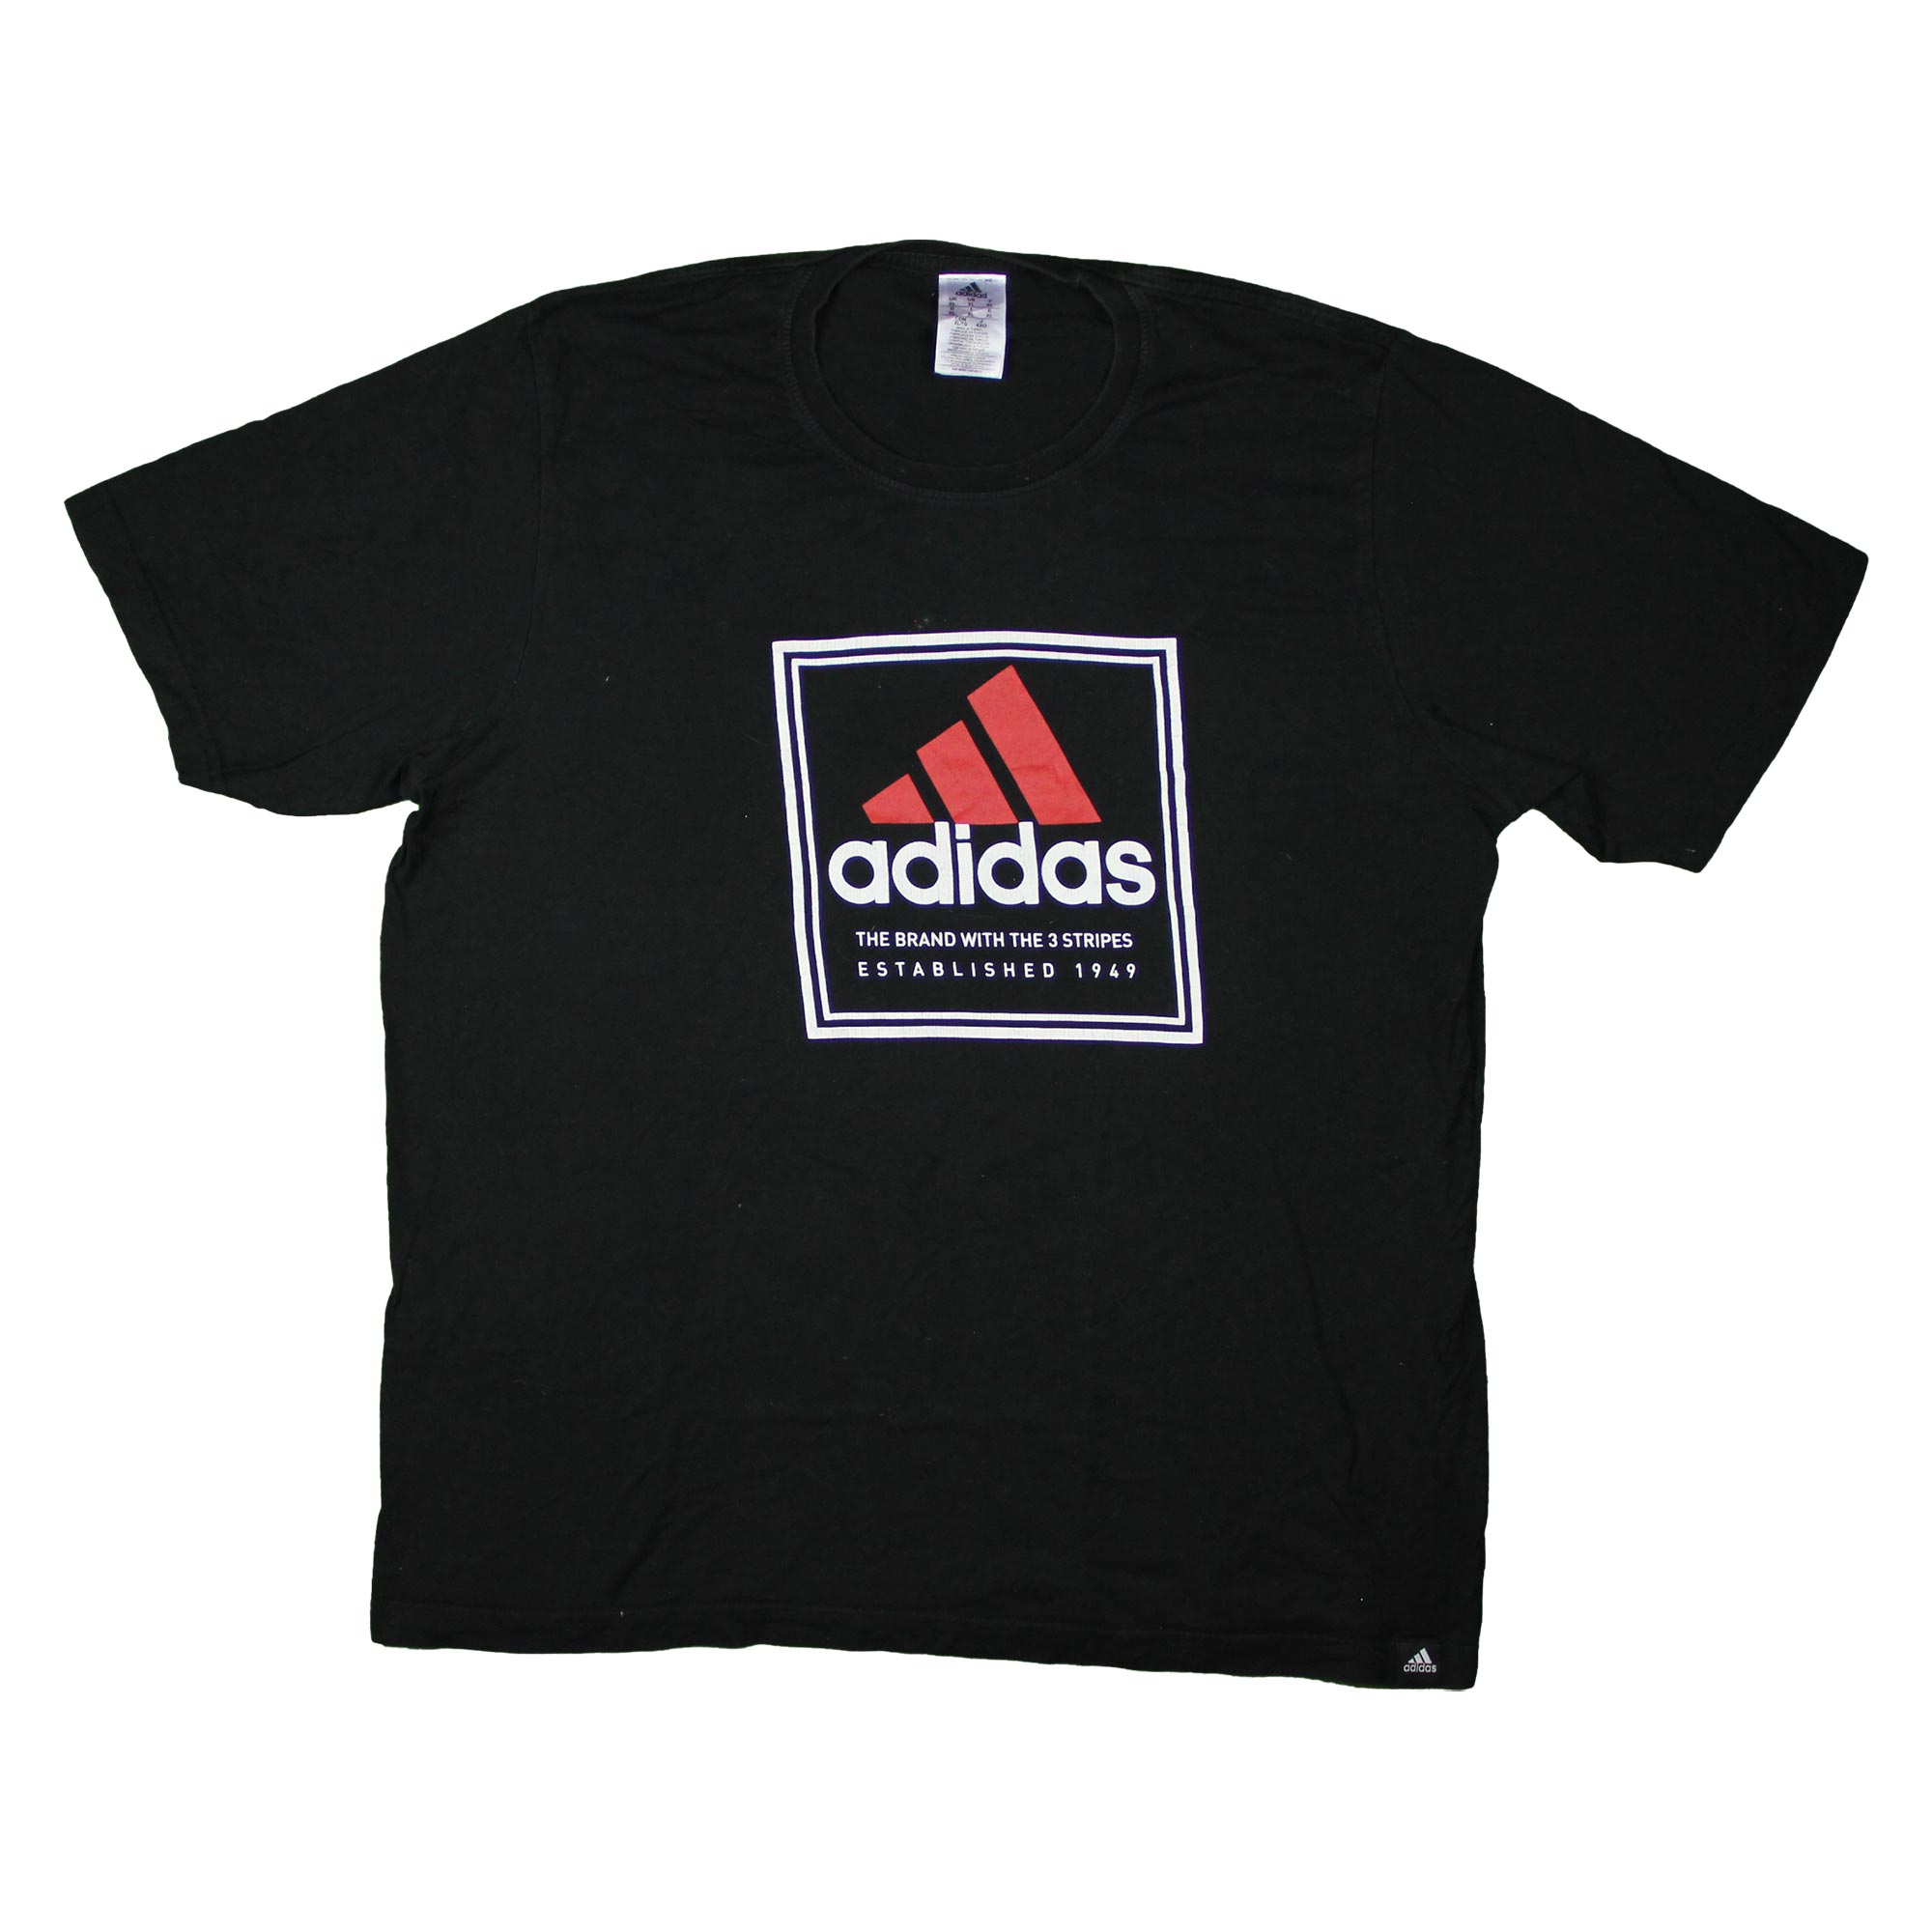 Adidas Vintage T-Shirt - XL